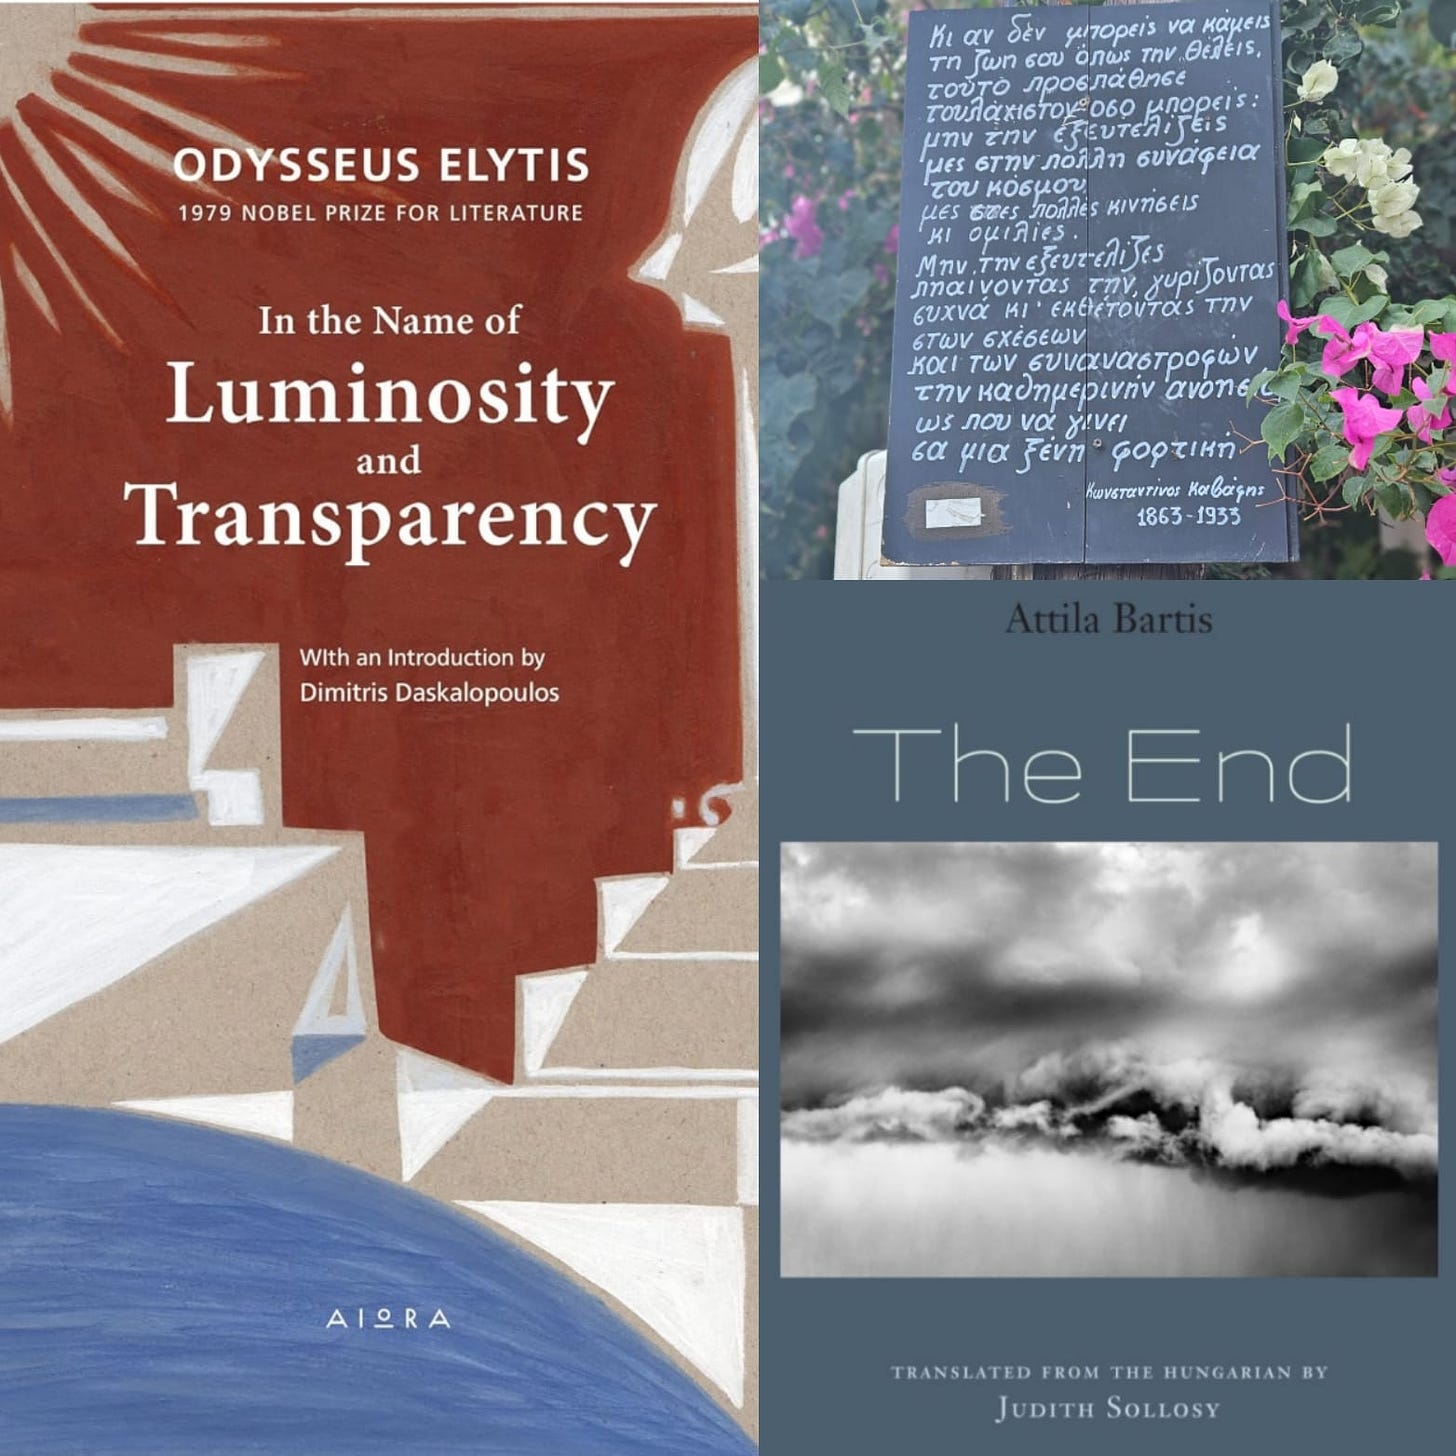 Elytis nobel prize speech cover and Attila Bartis The End book cover